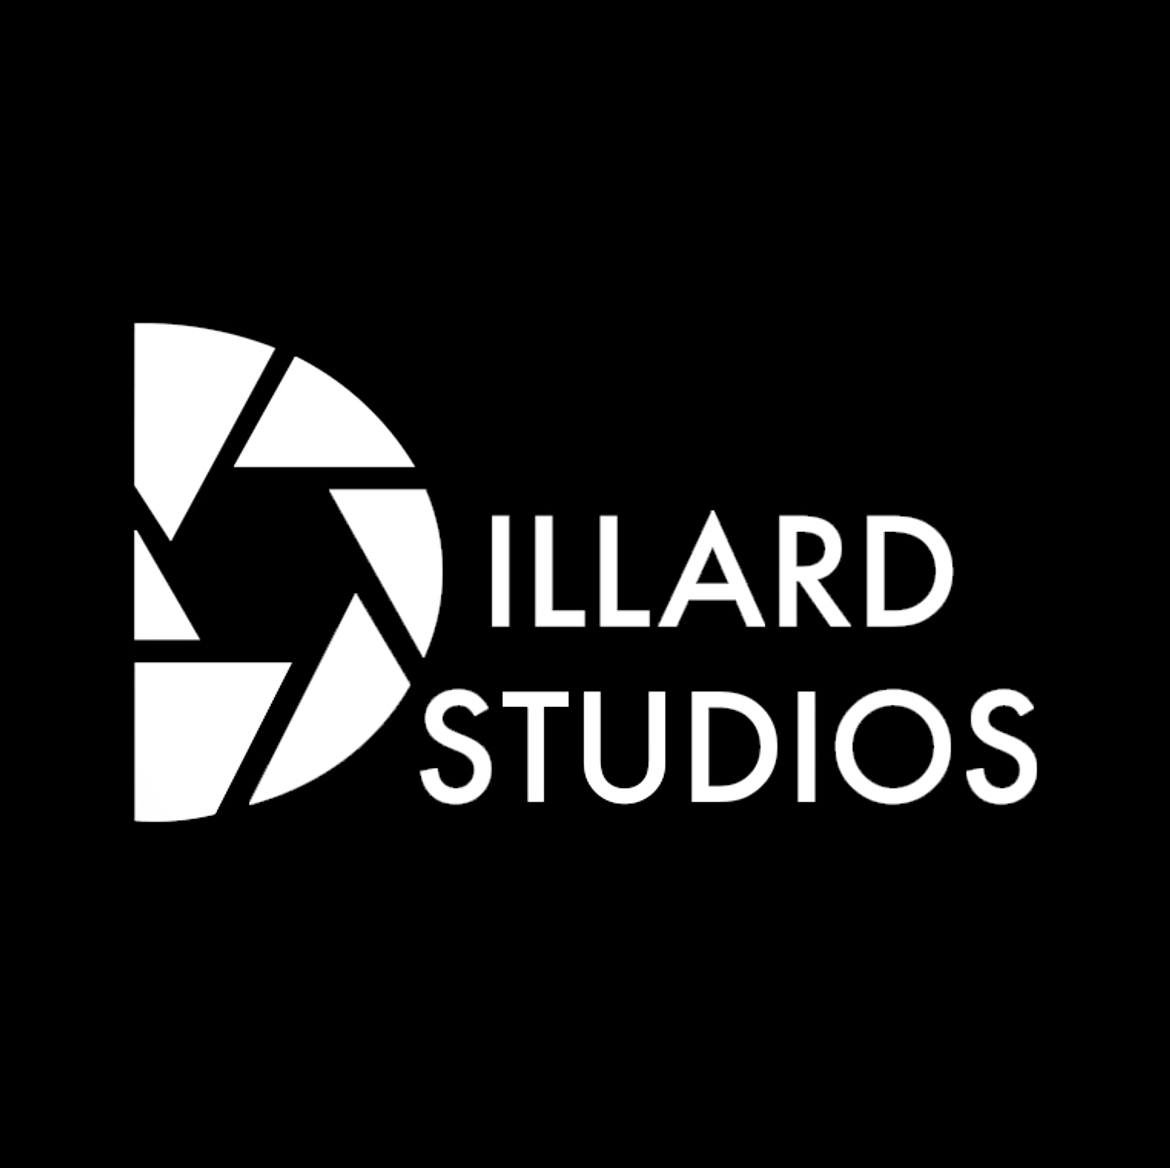 Dillard Studios Logo copy.png